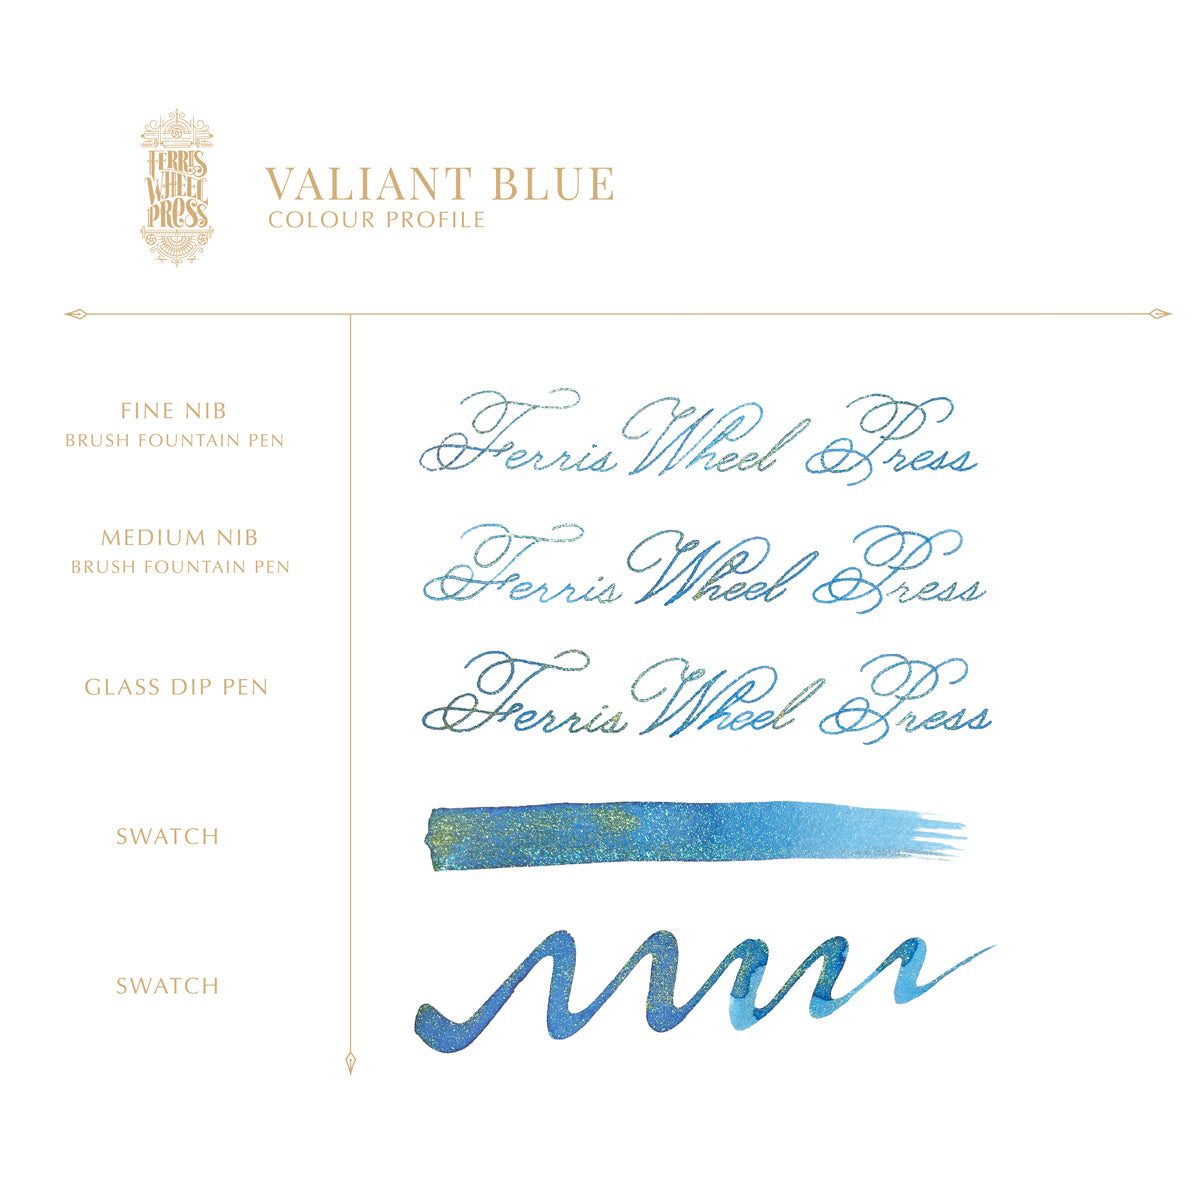 Ferritales 85ml vulpeninkt - Valiant Blue